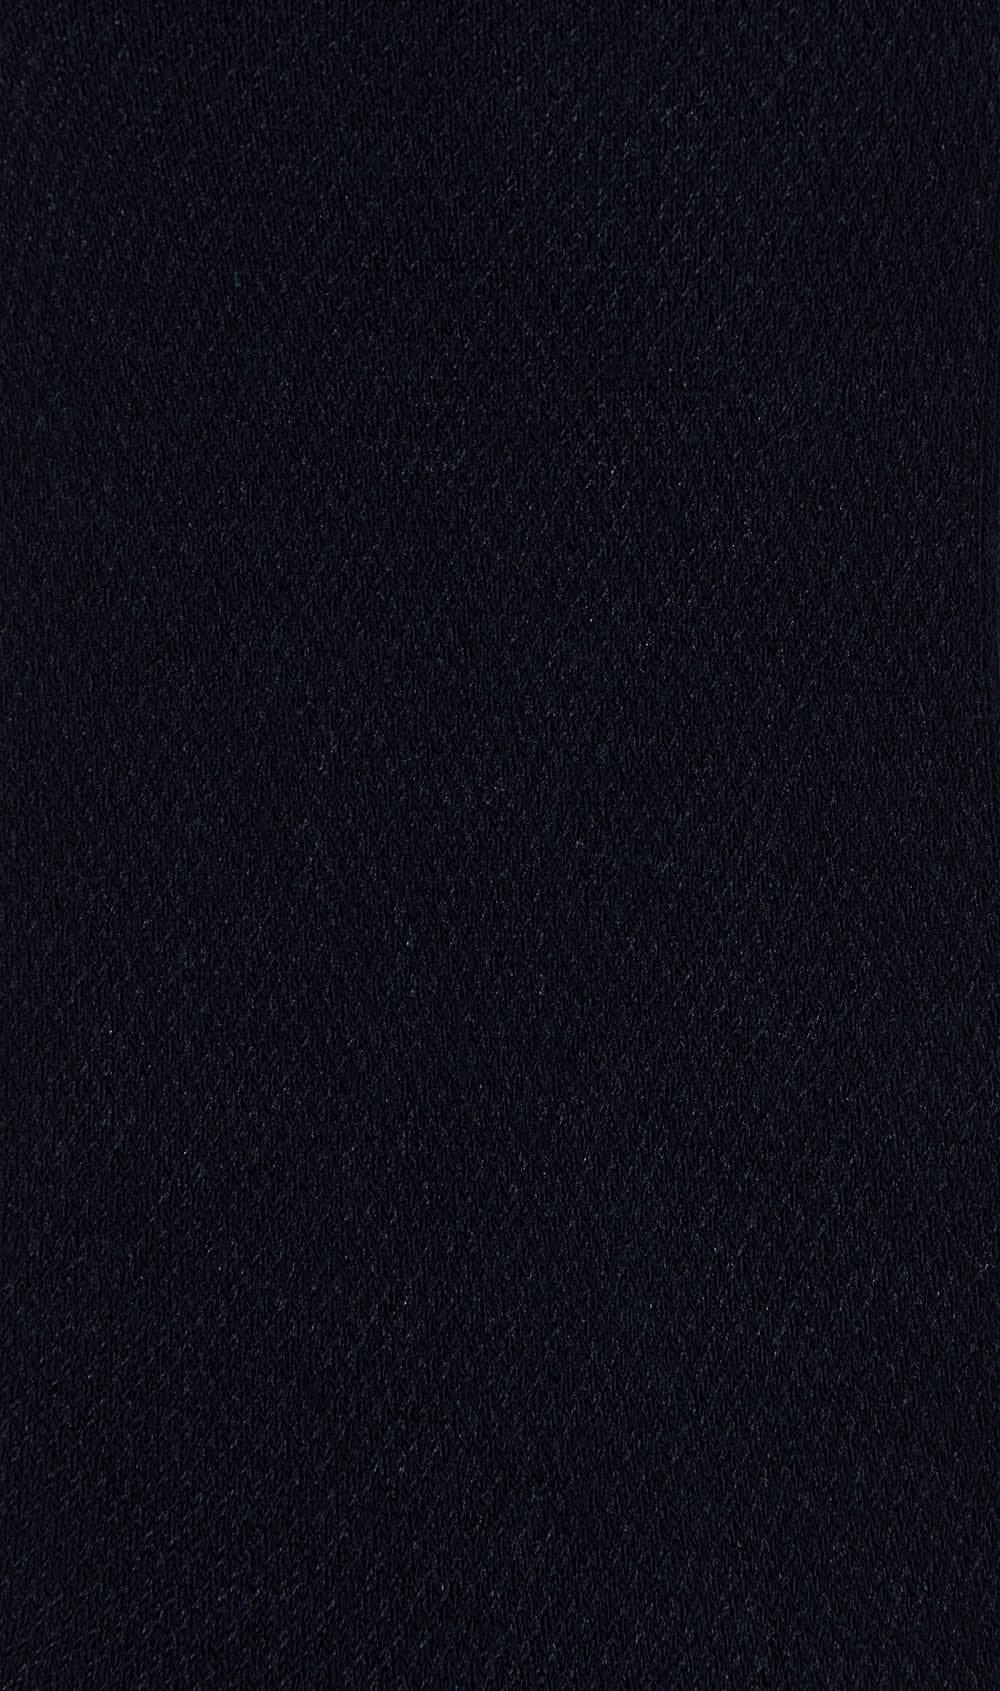 Dark Midnight Navy Blue Low-Cut Socks Pattern